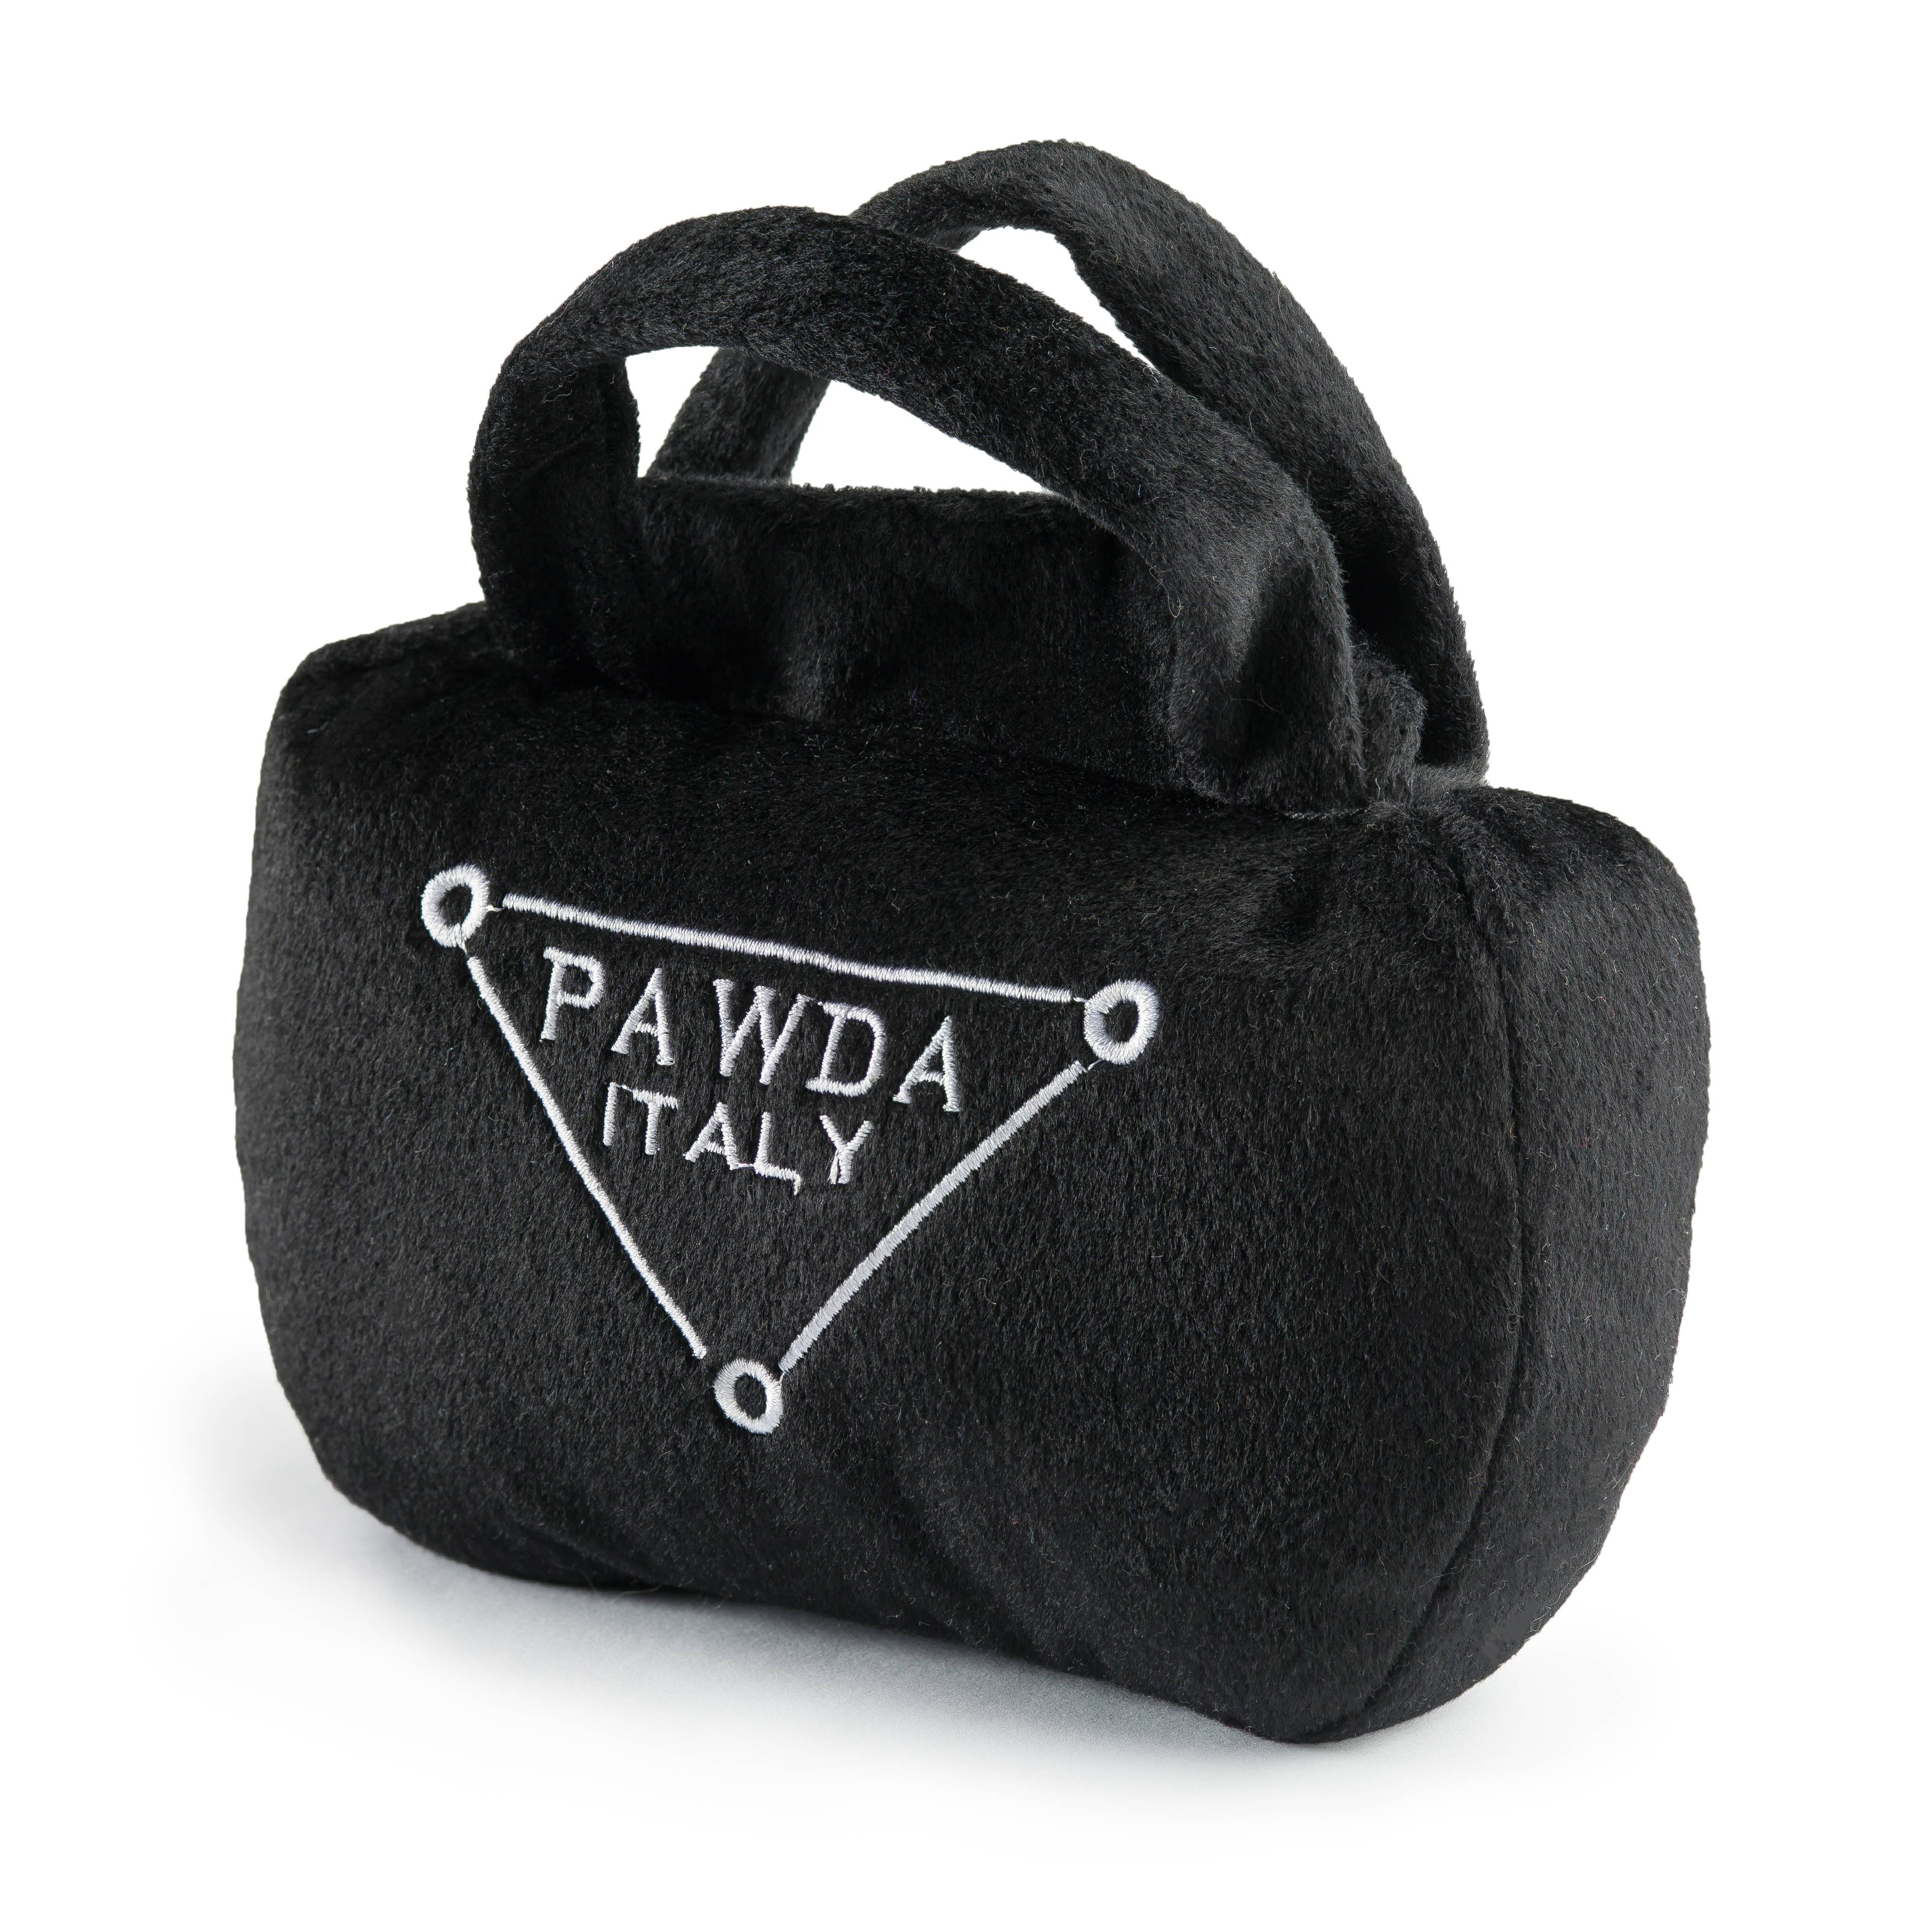 Pawda Handbag Squeaker Dog Toy